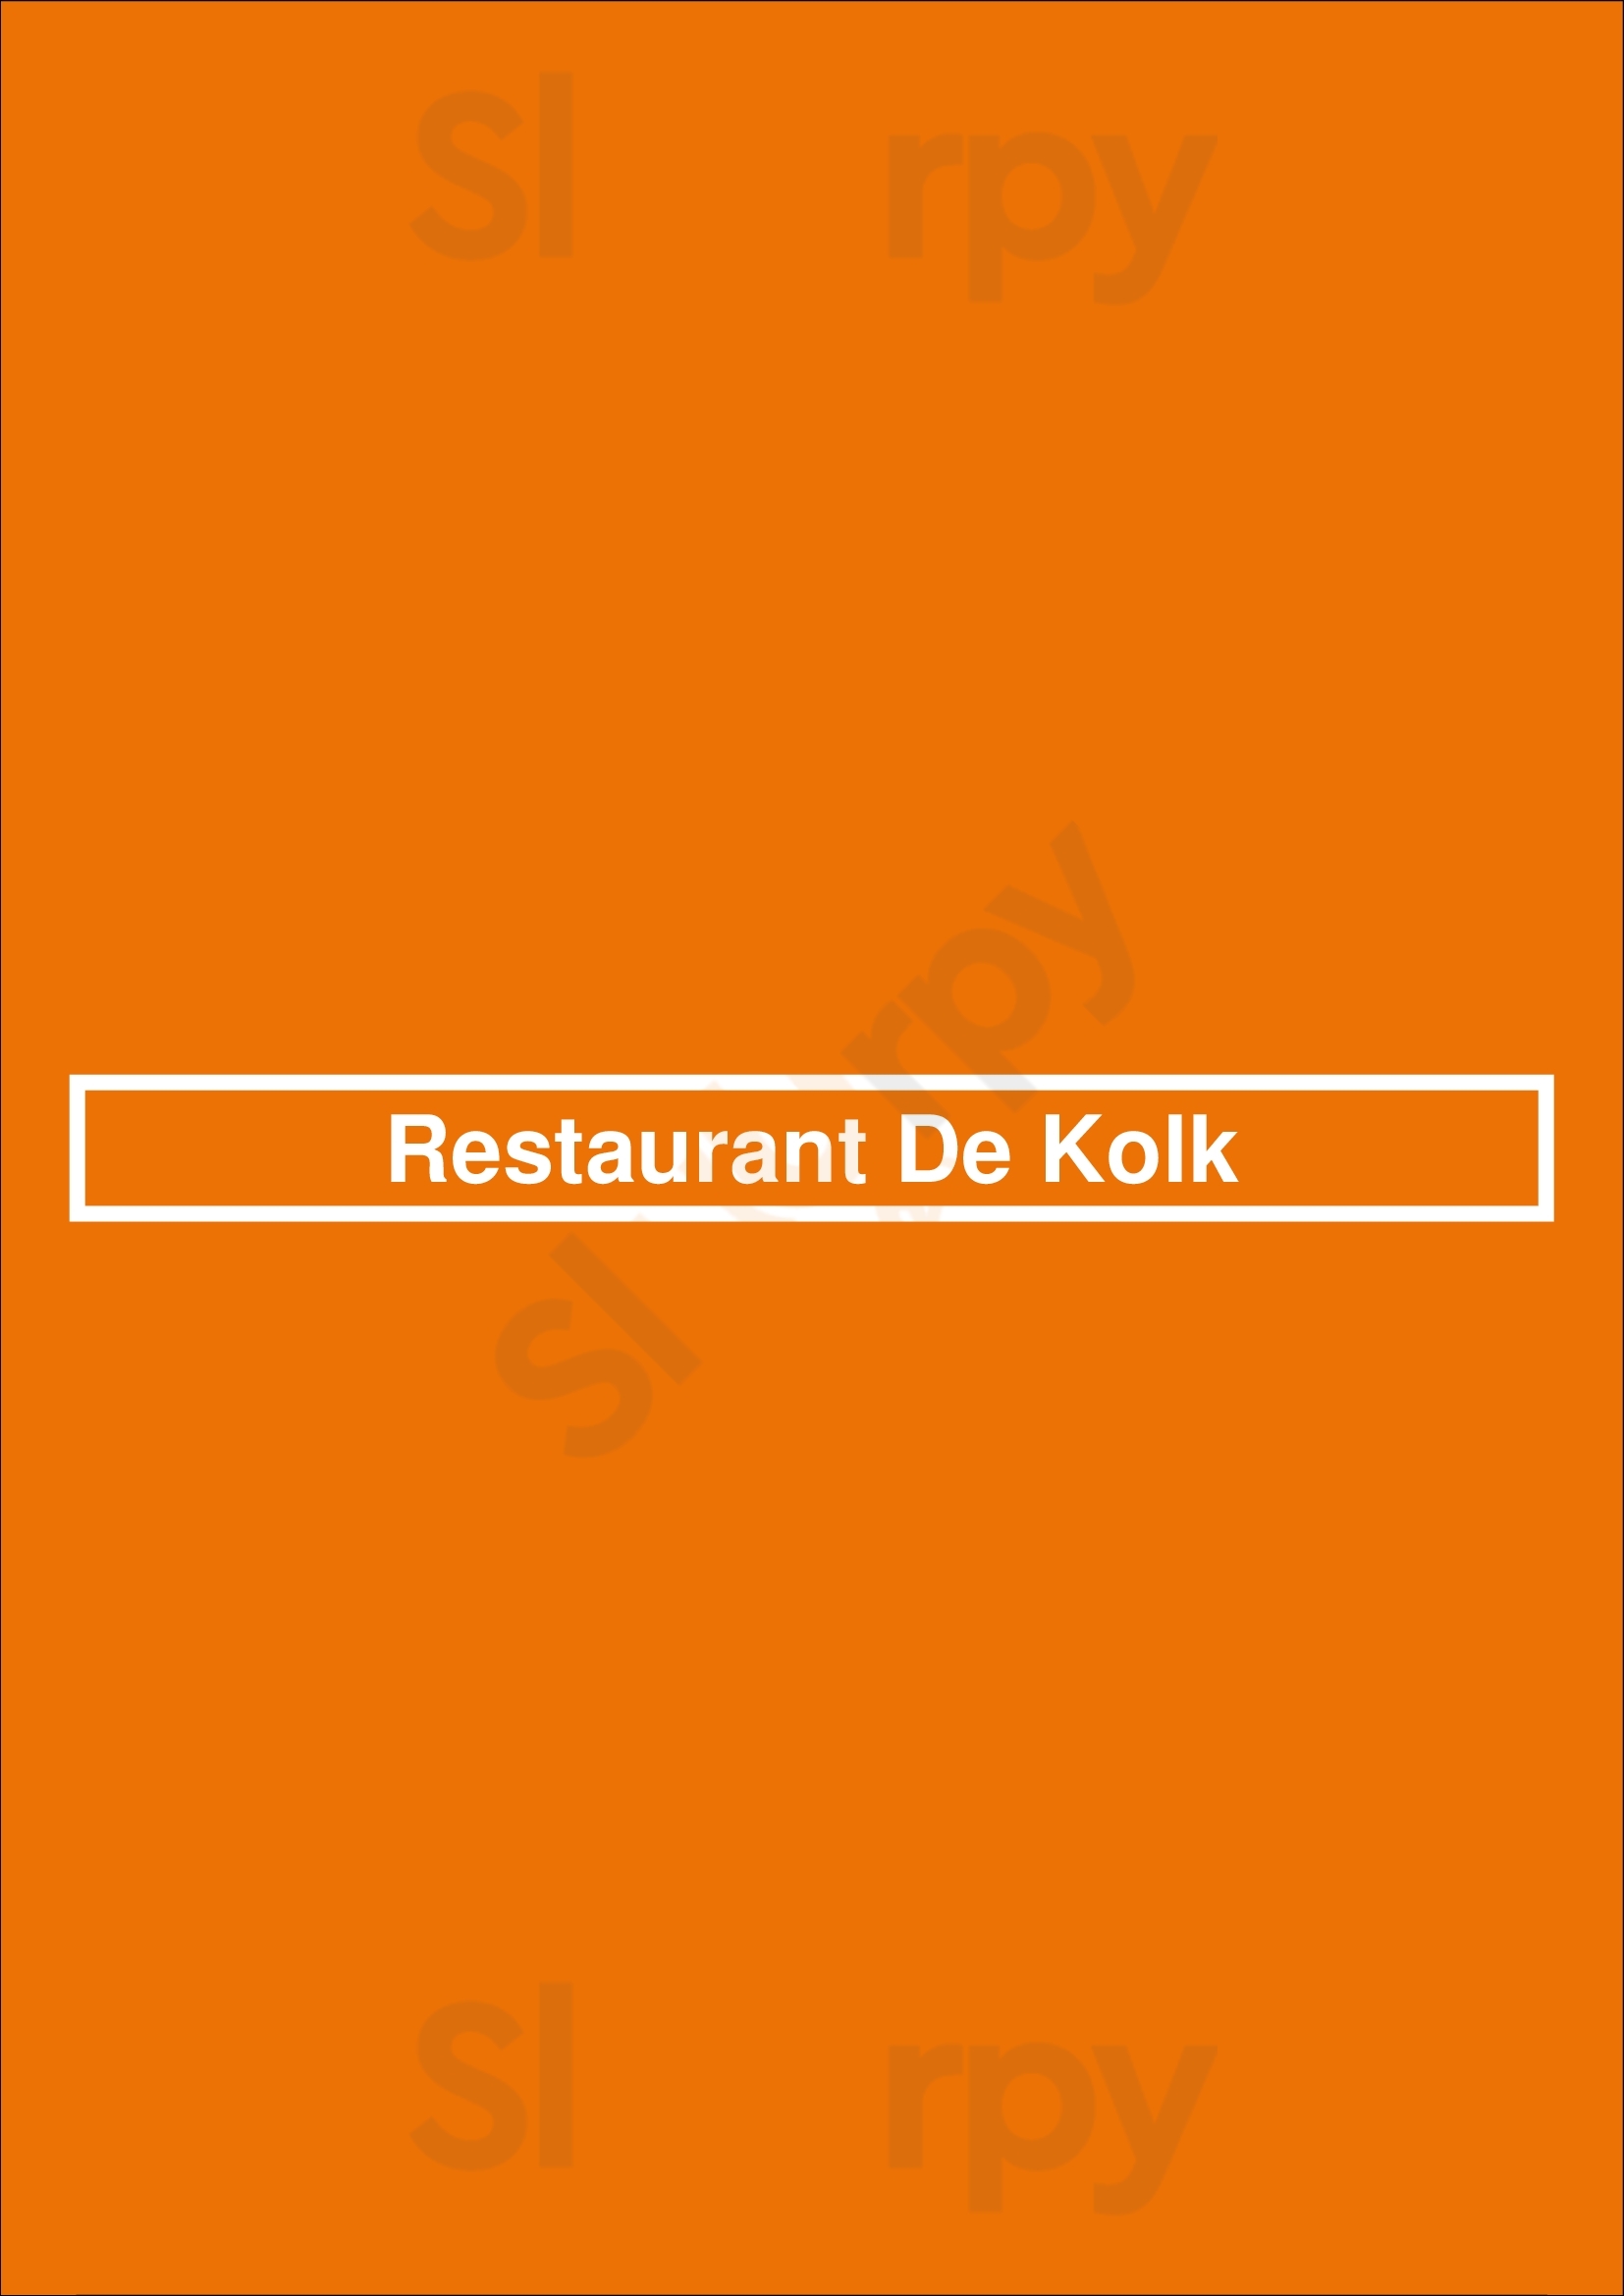 Restaurant De Kolk Spaarndam Menu - 1